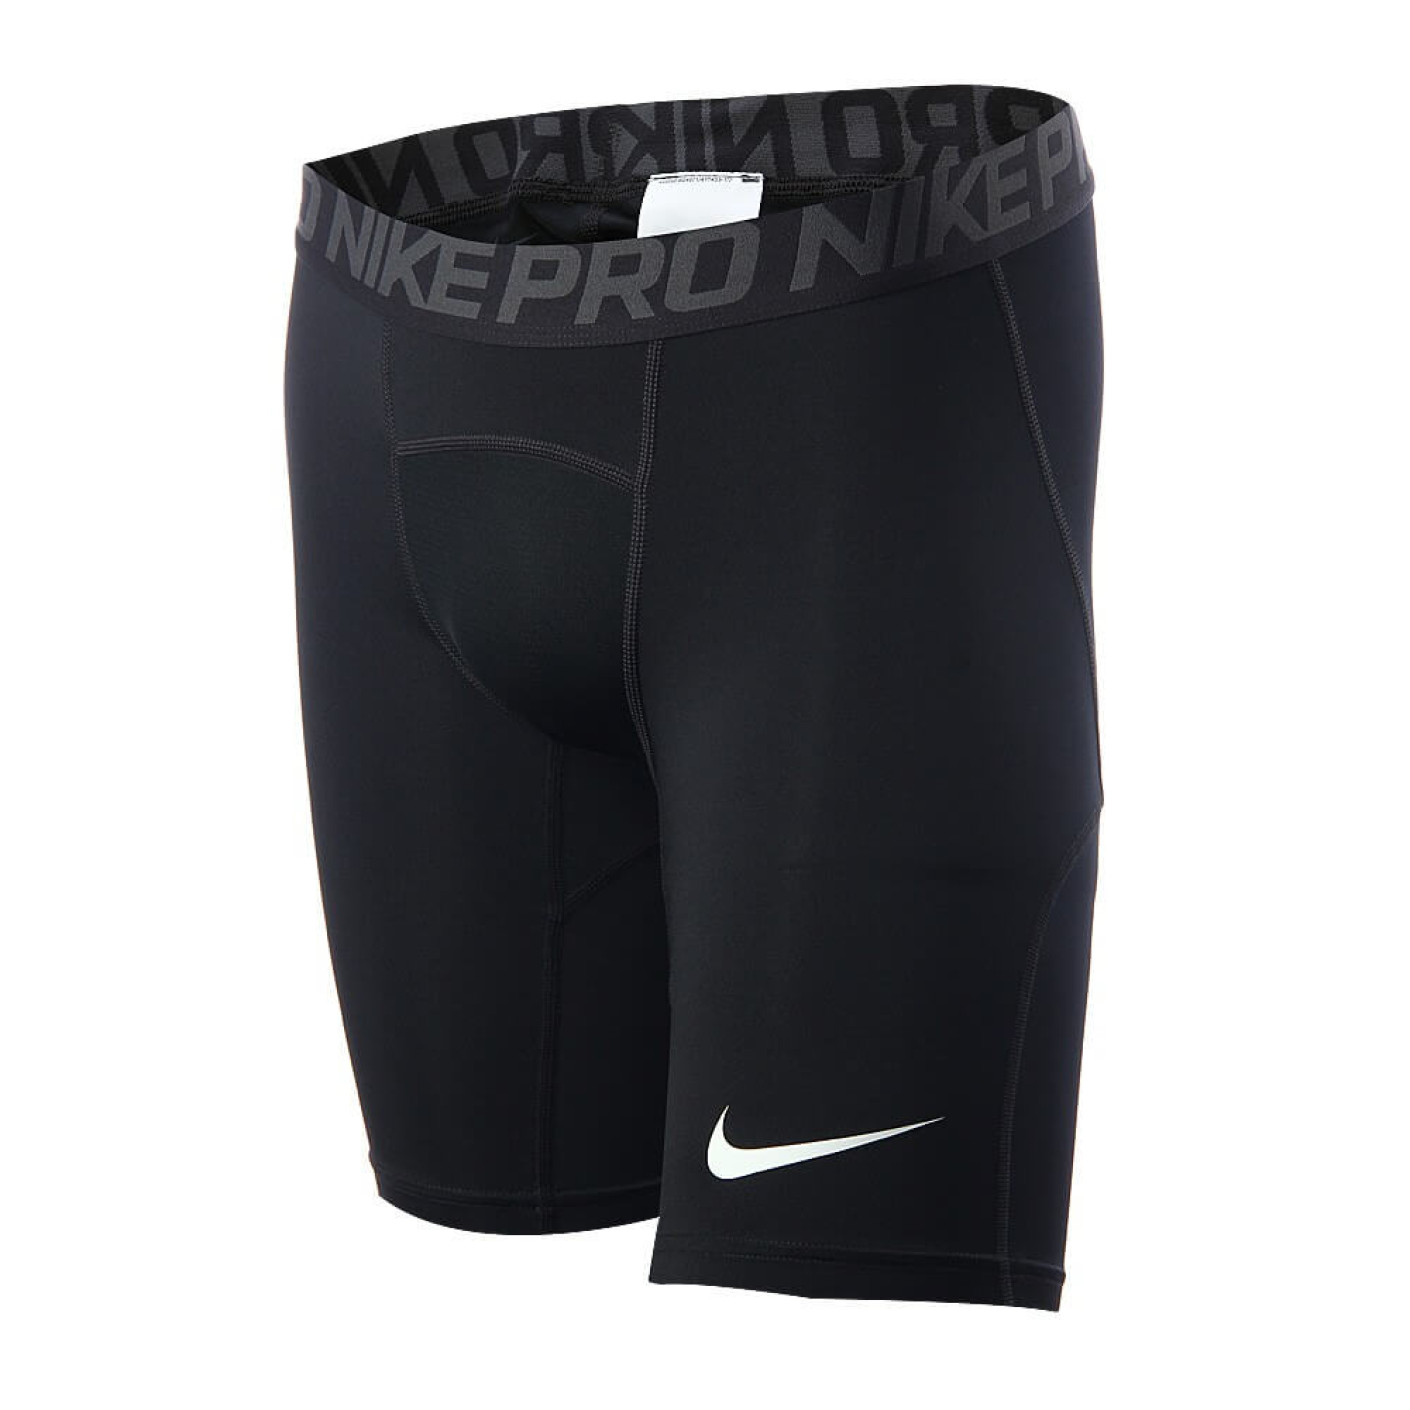 Nike Pro Compressie Broekje Zwart